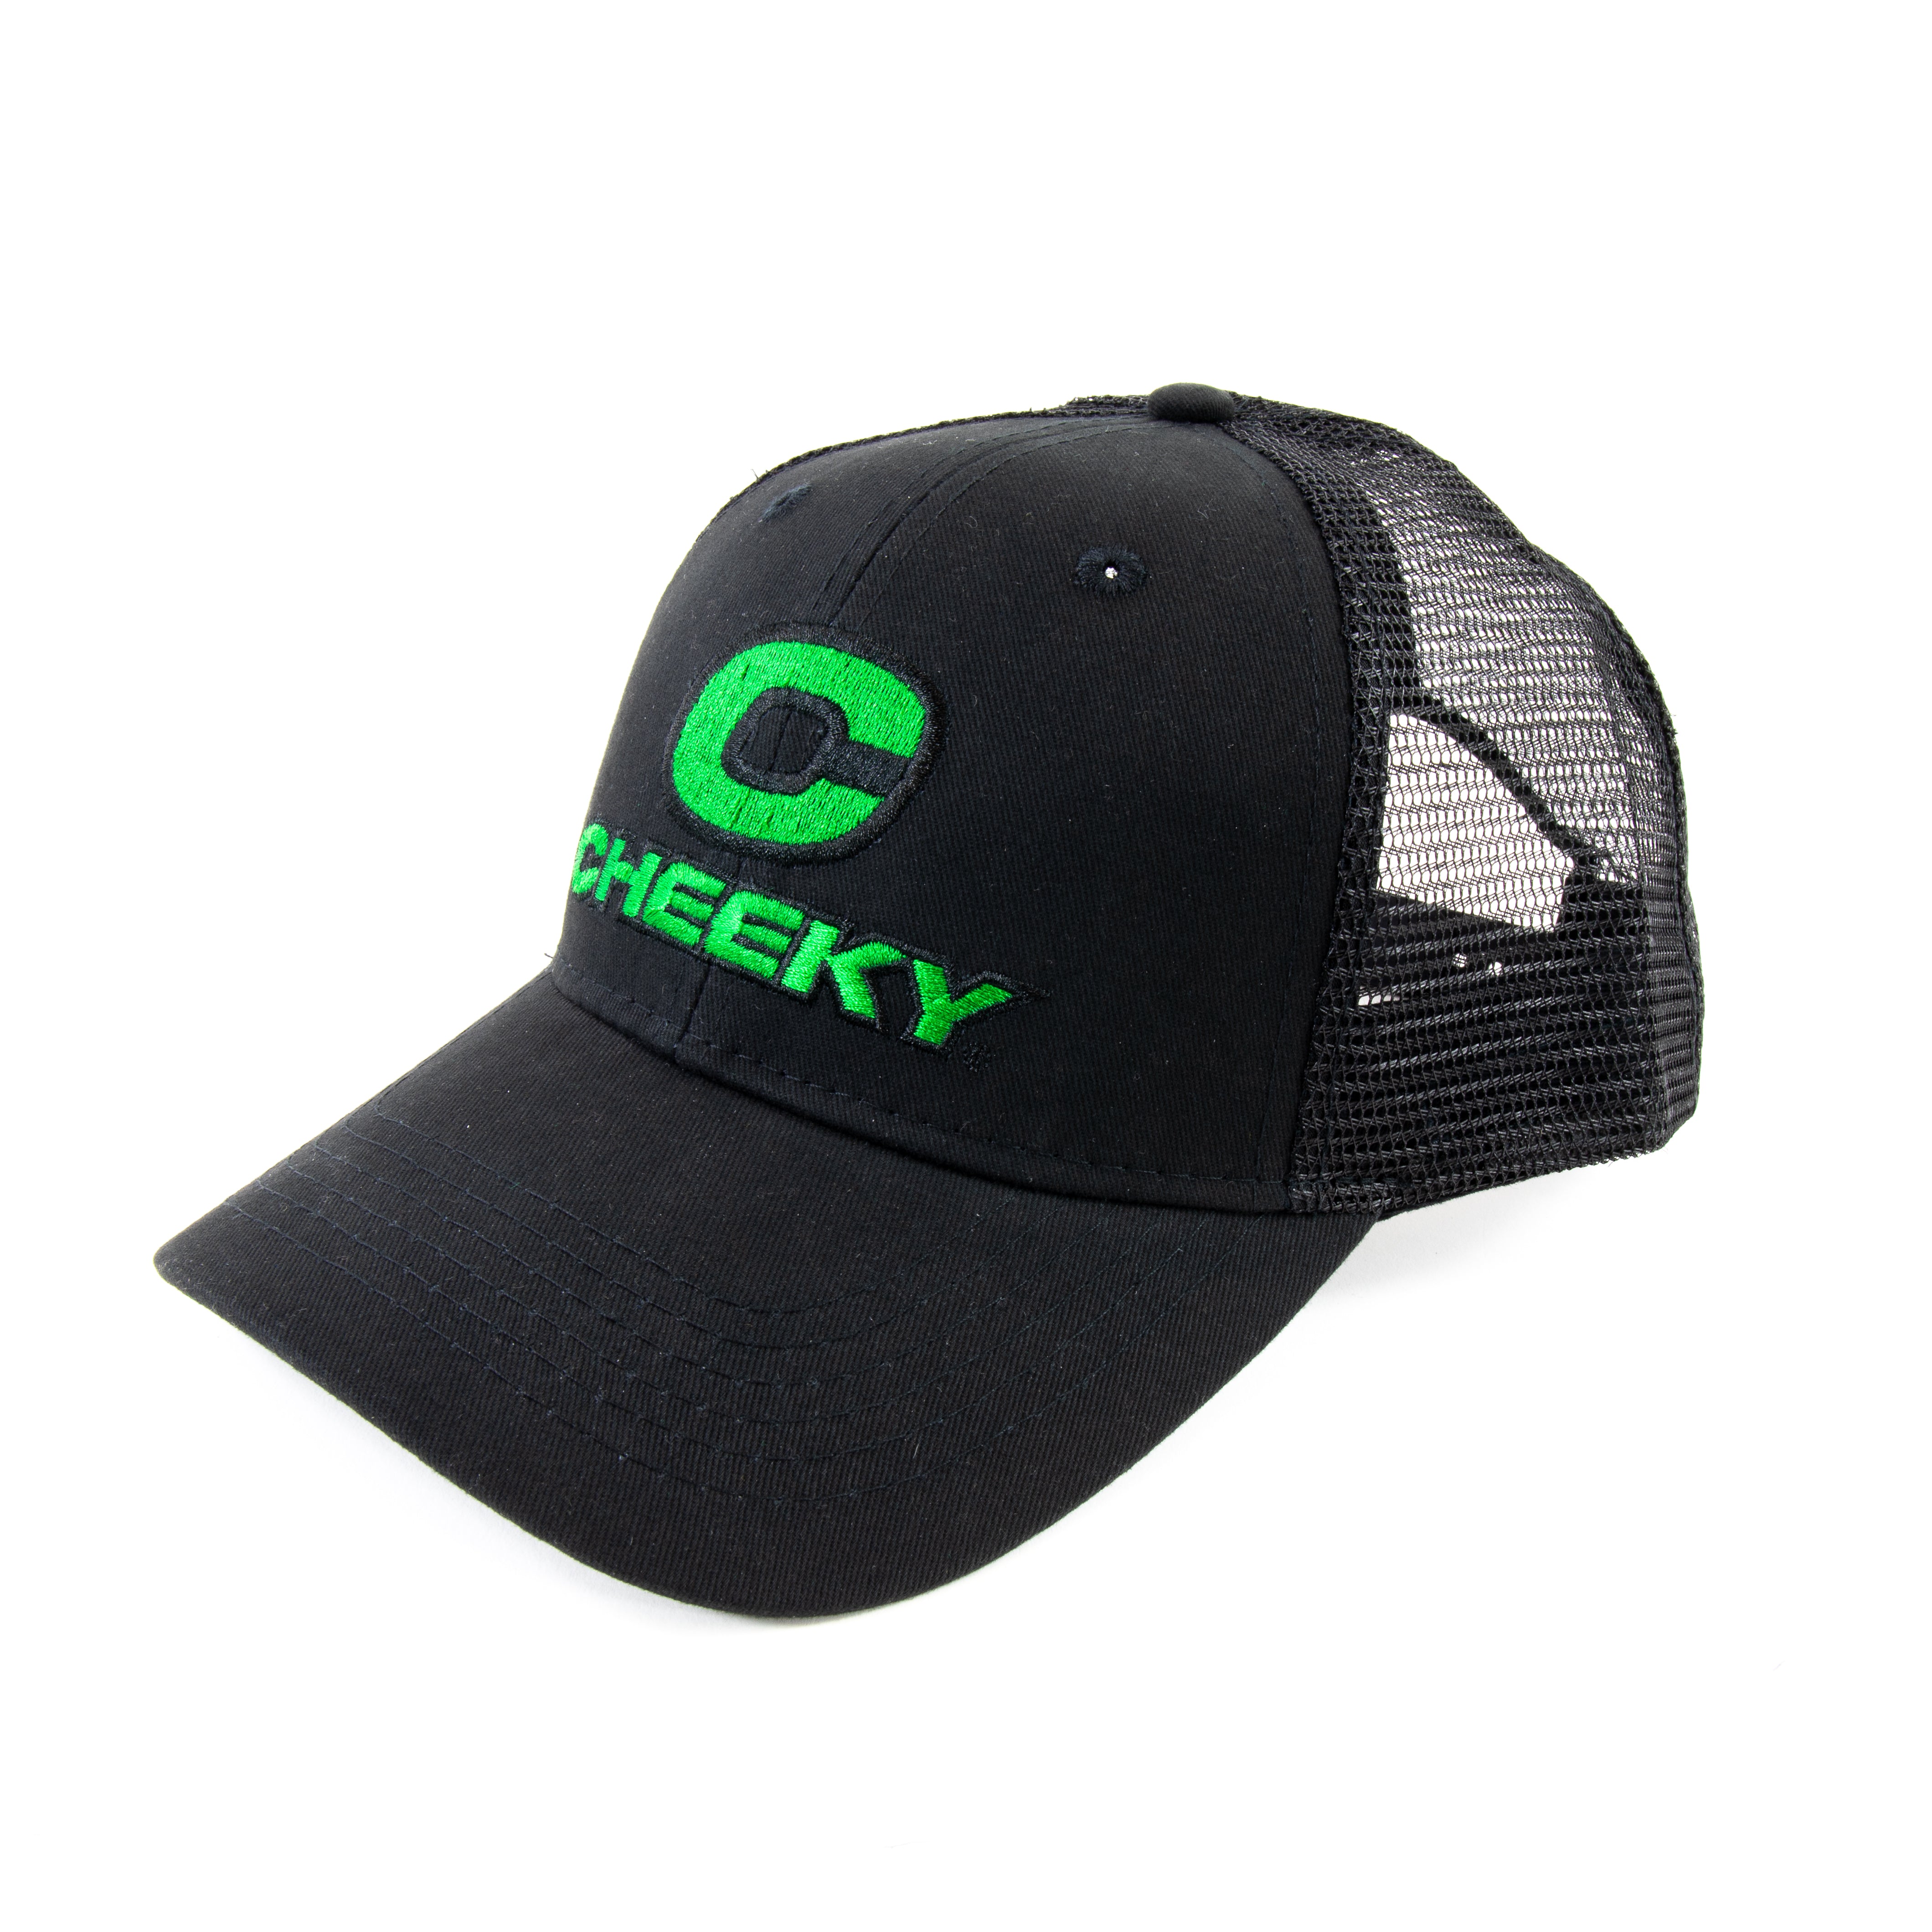 Black Trucker Hat with Mesh Backing - Cheeky Fishing